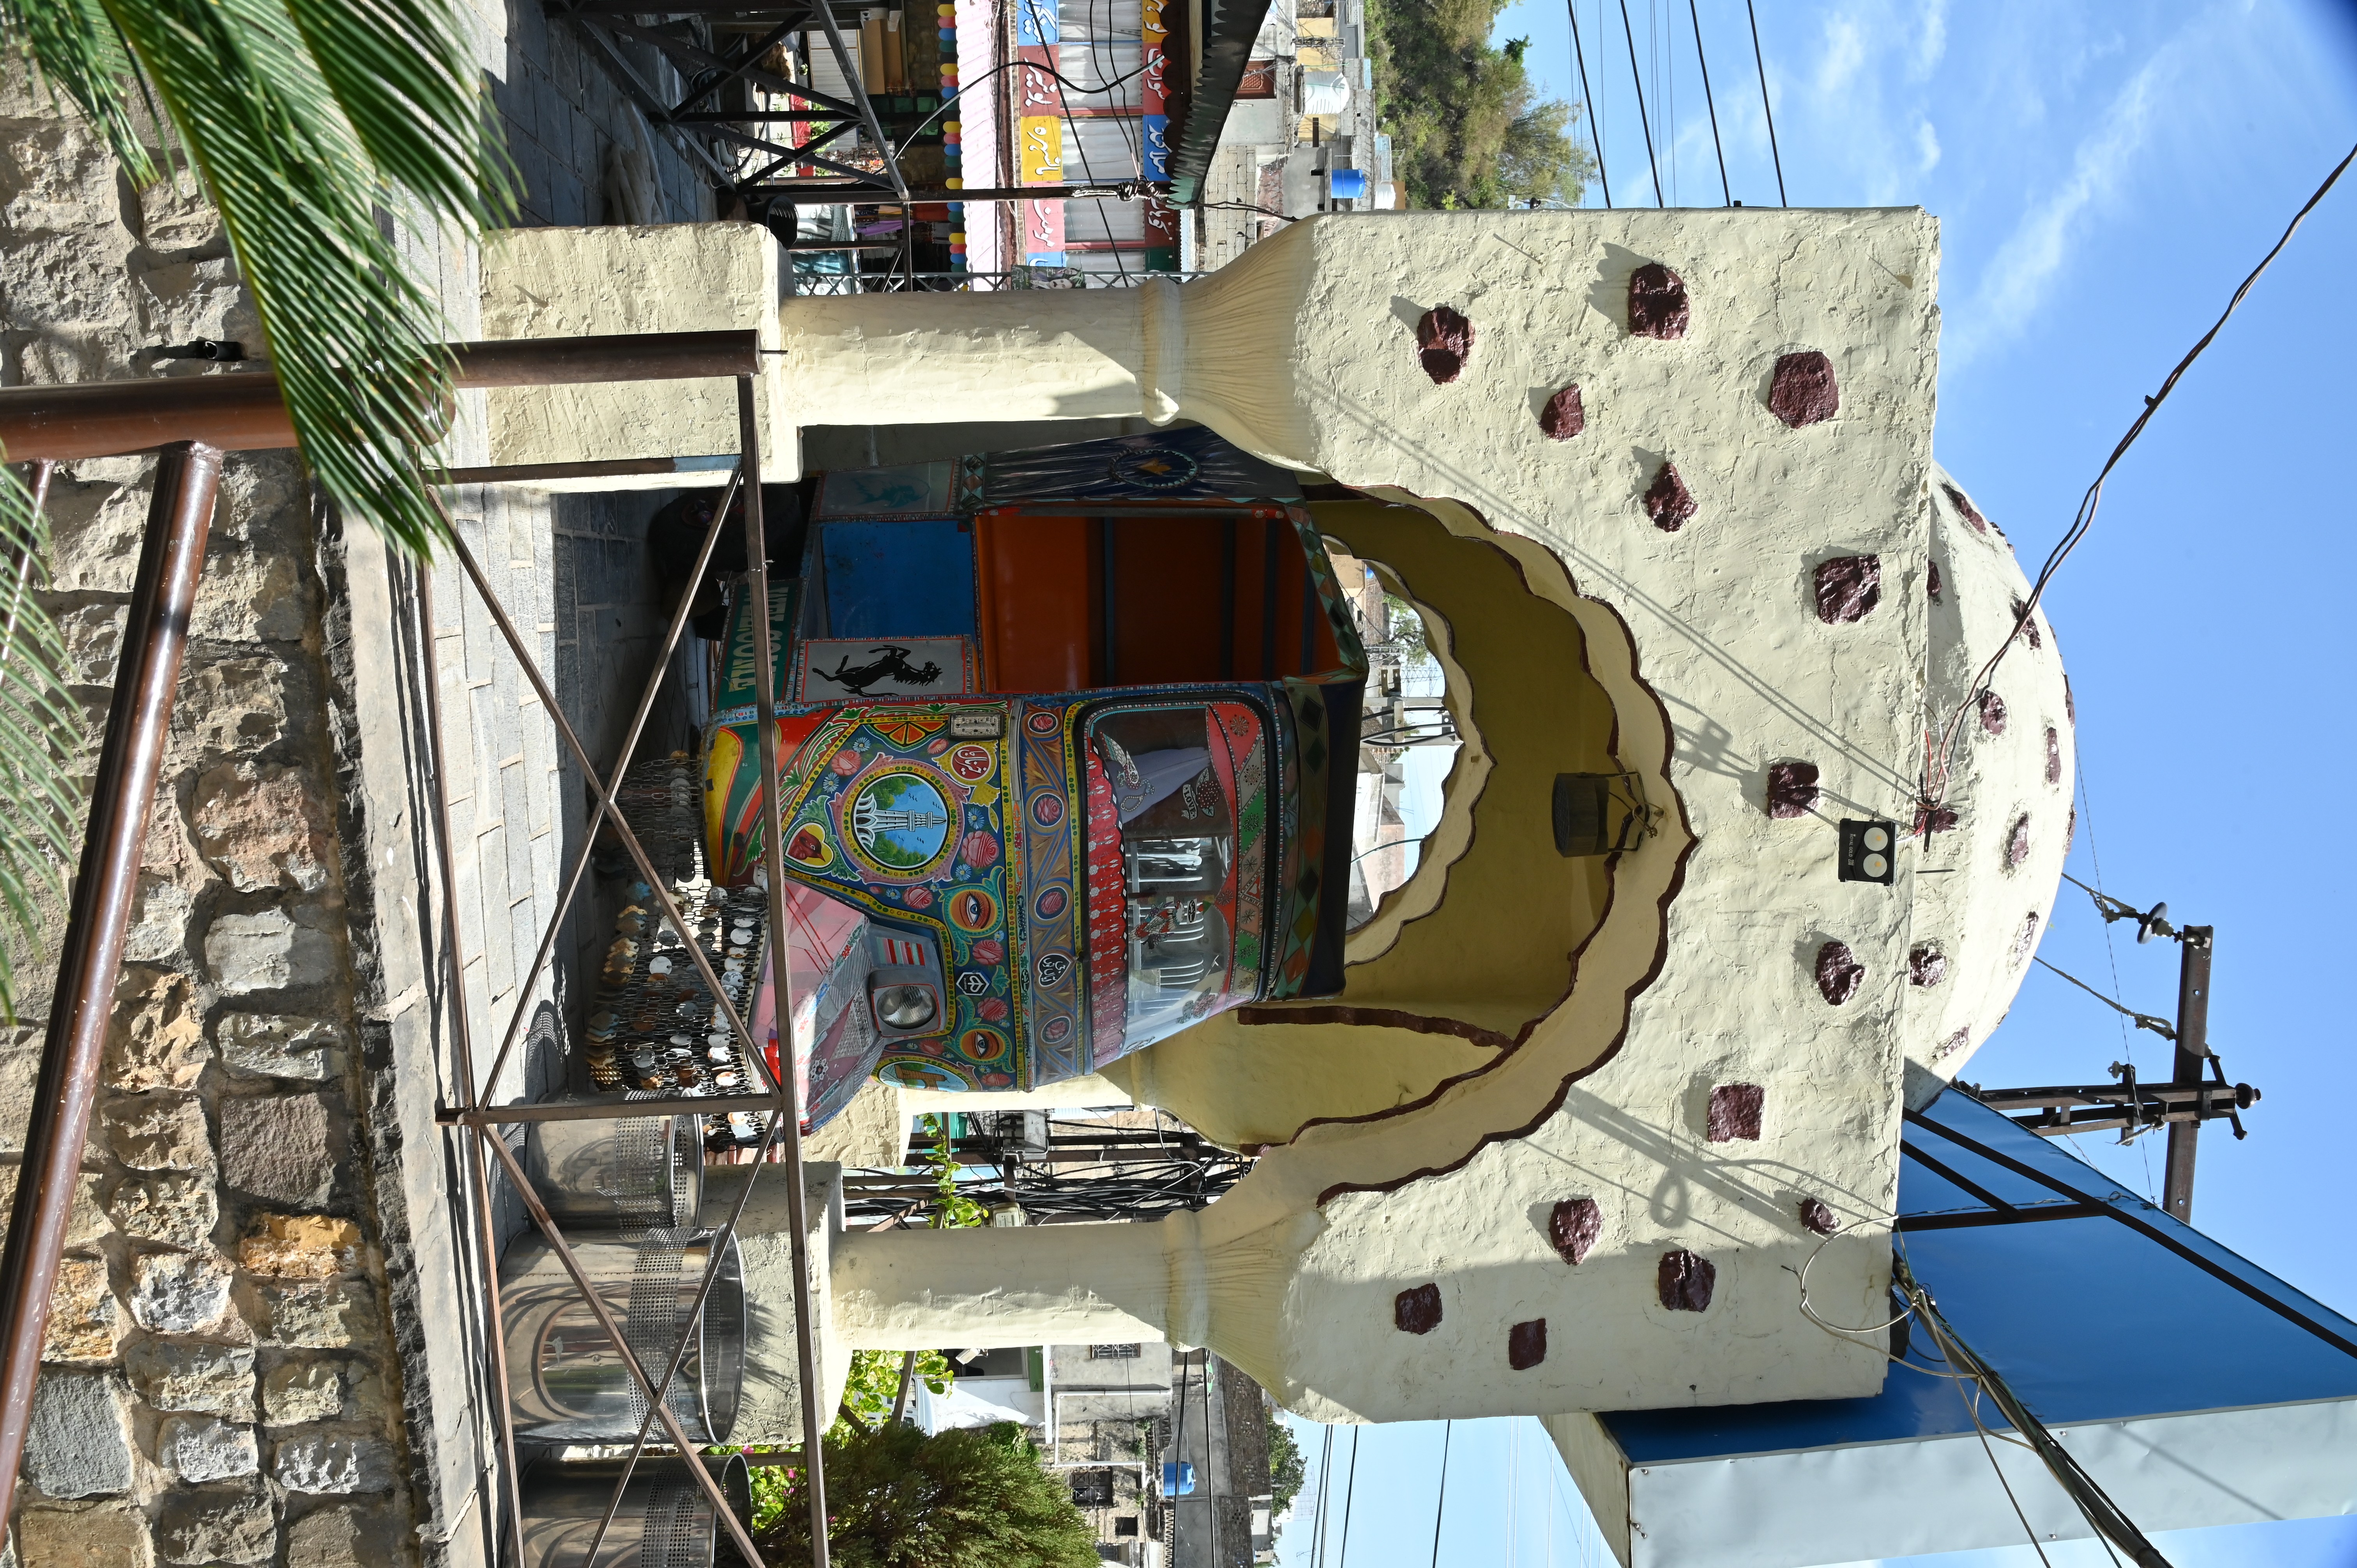 A symbolic rikshaw at the village